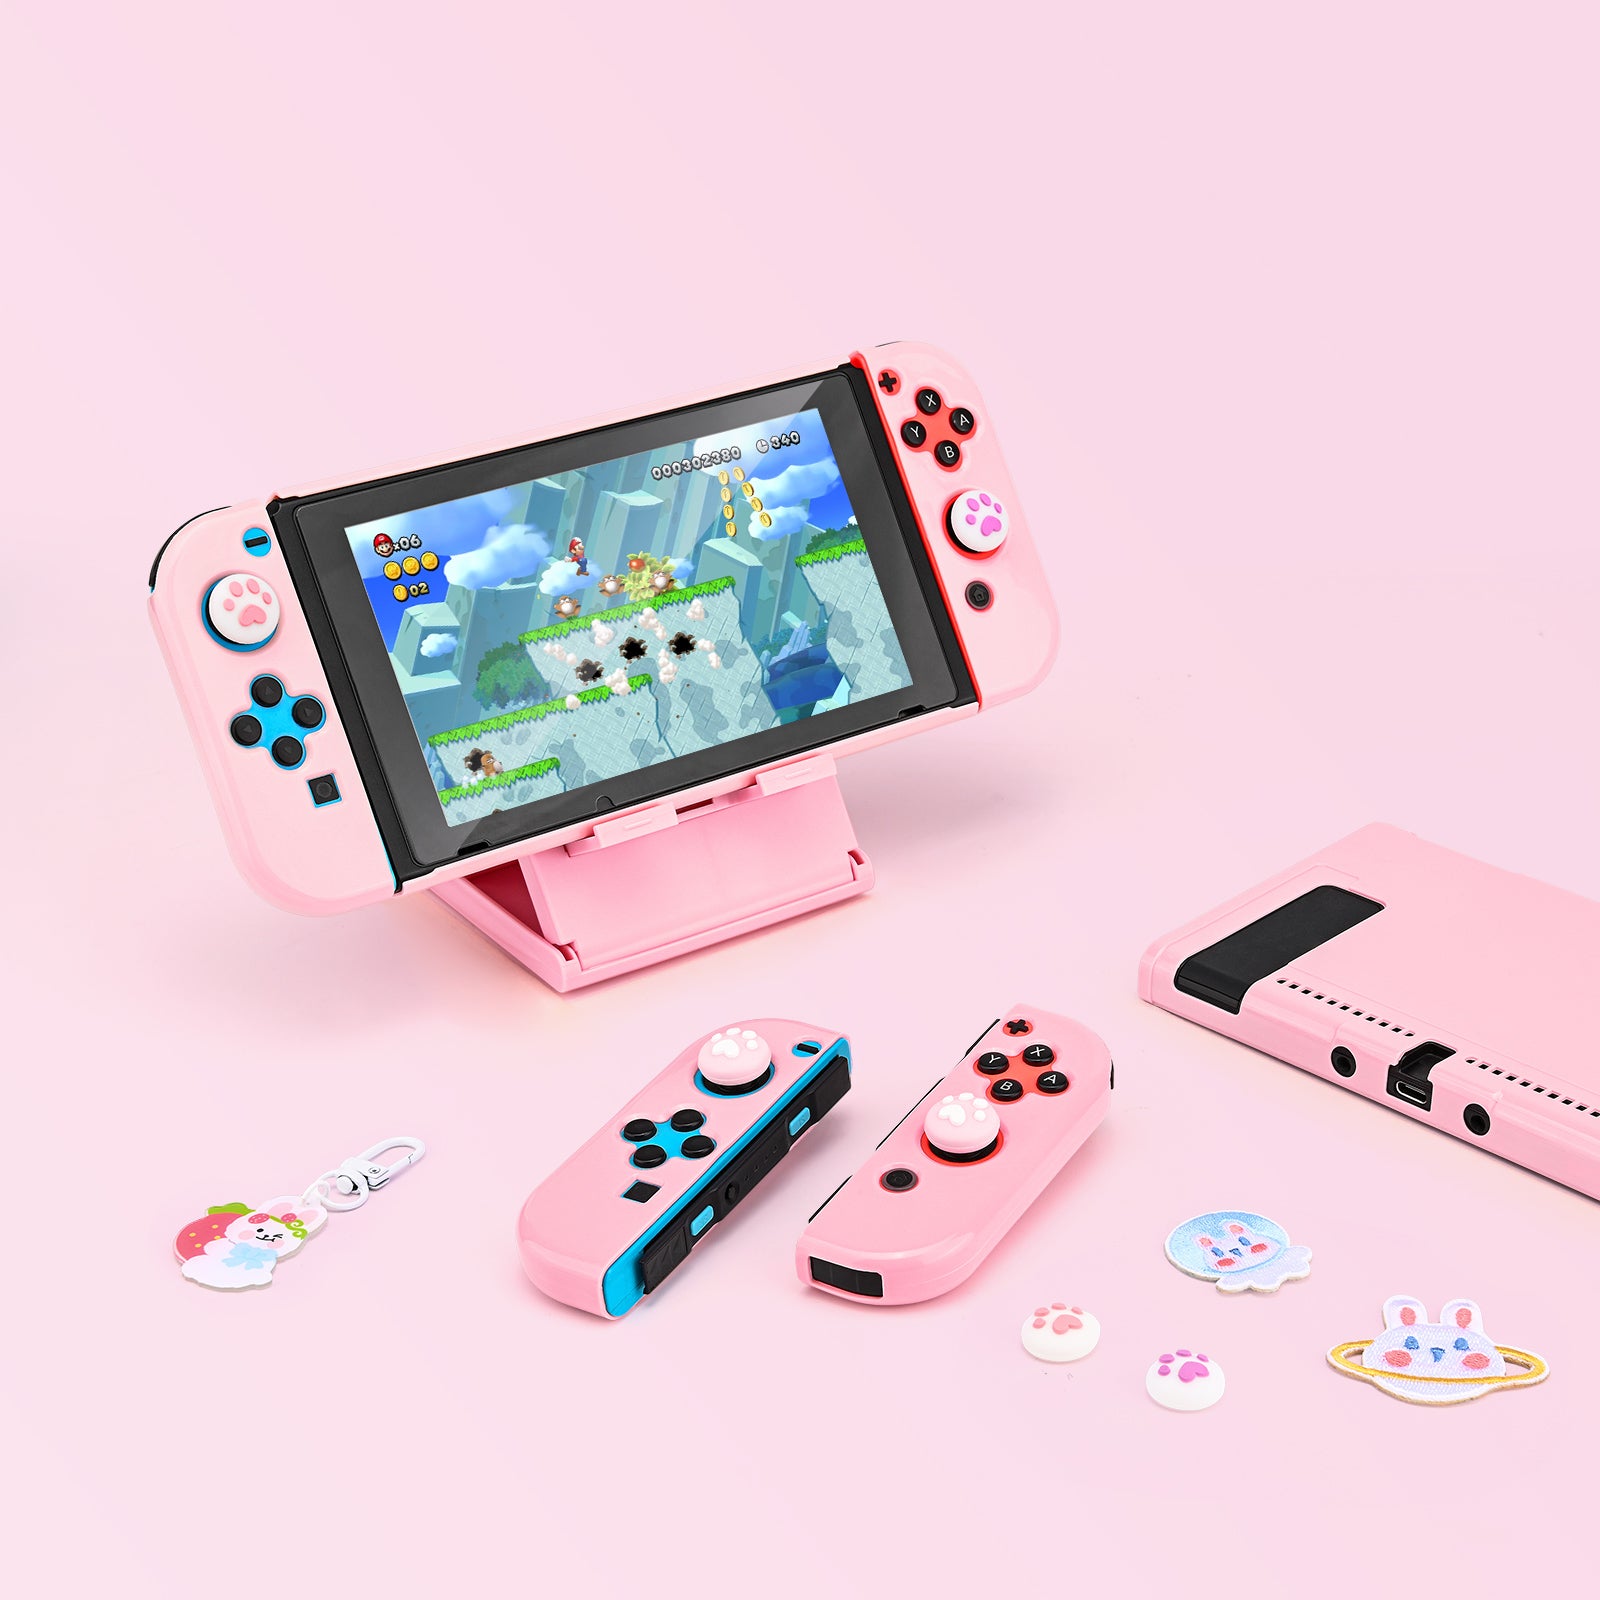 Younik Cute Nintendo Switch Case, Switch Carrying Case for Kids